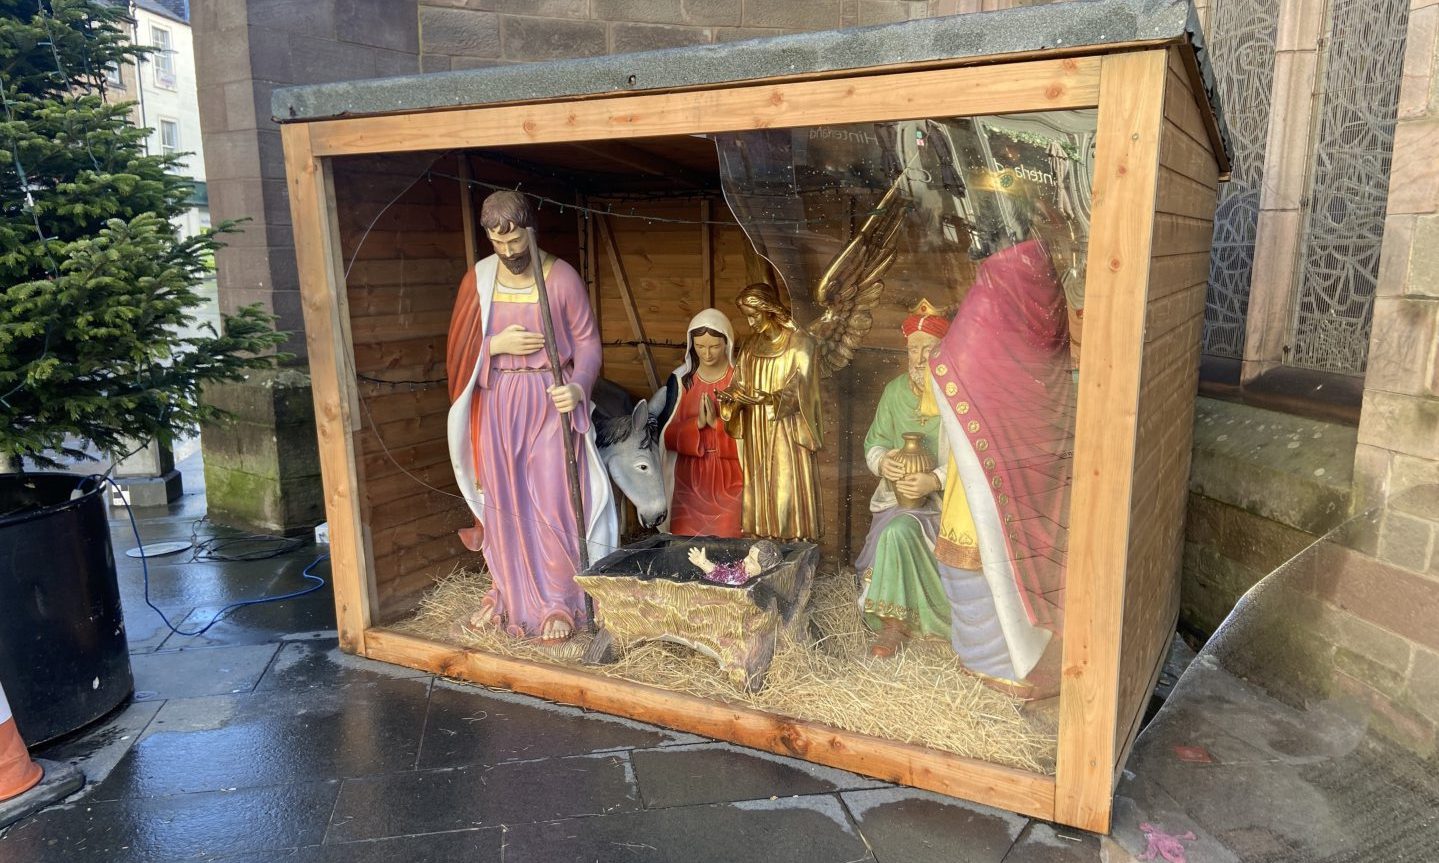 The nativity scene outside St John's Kirk in Perth